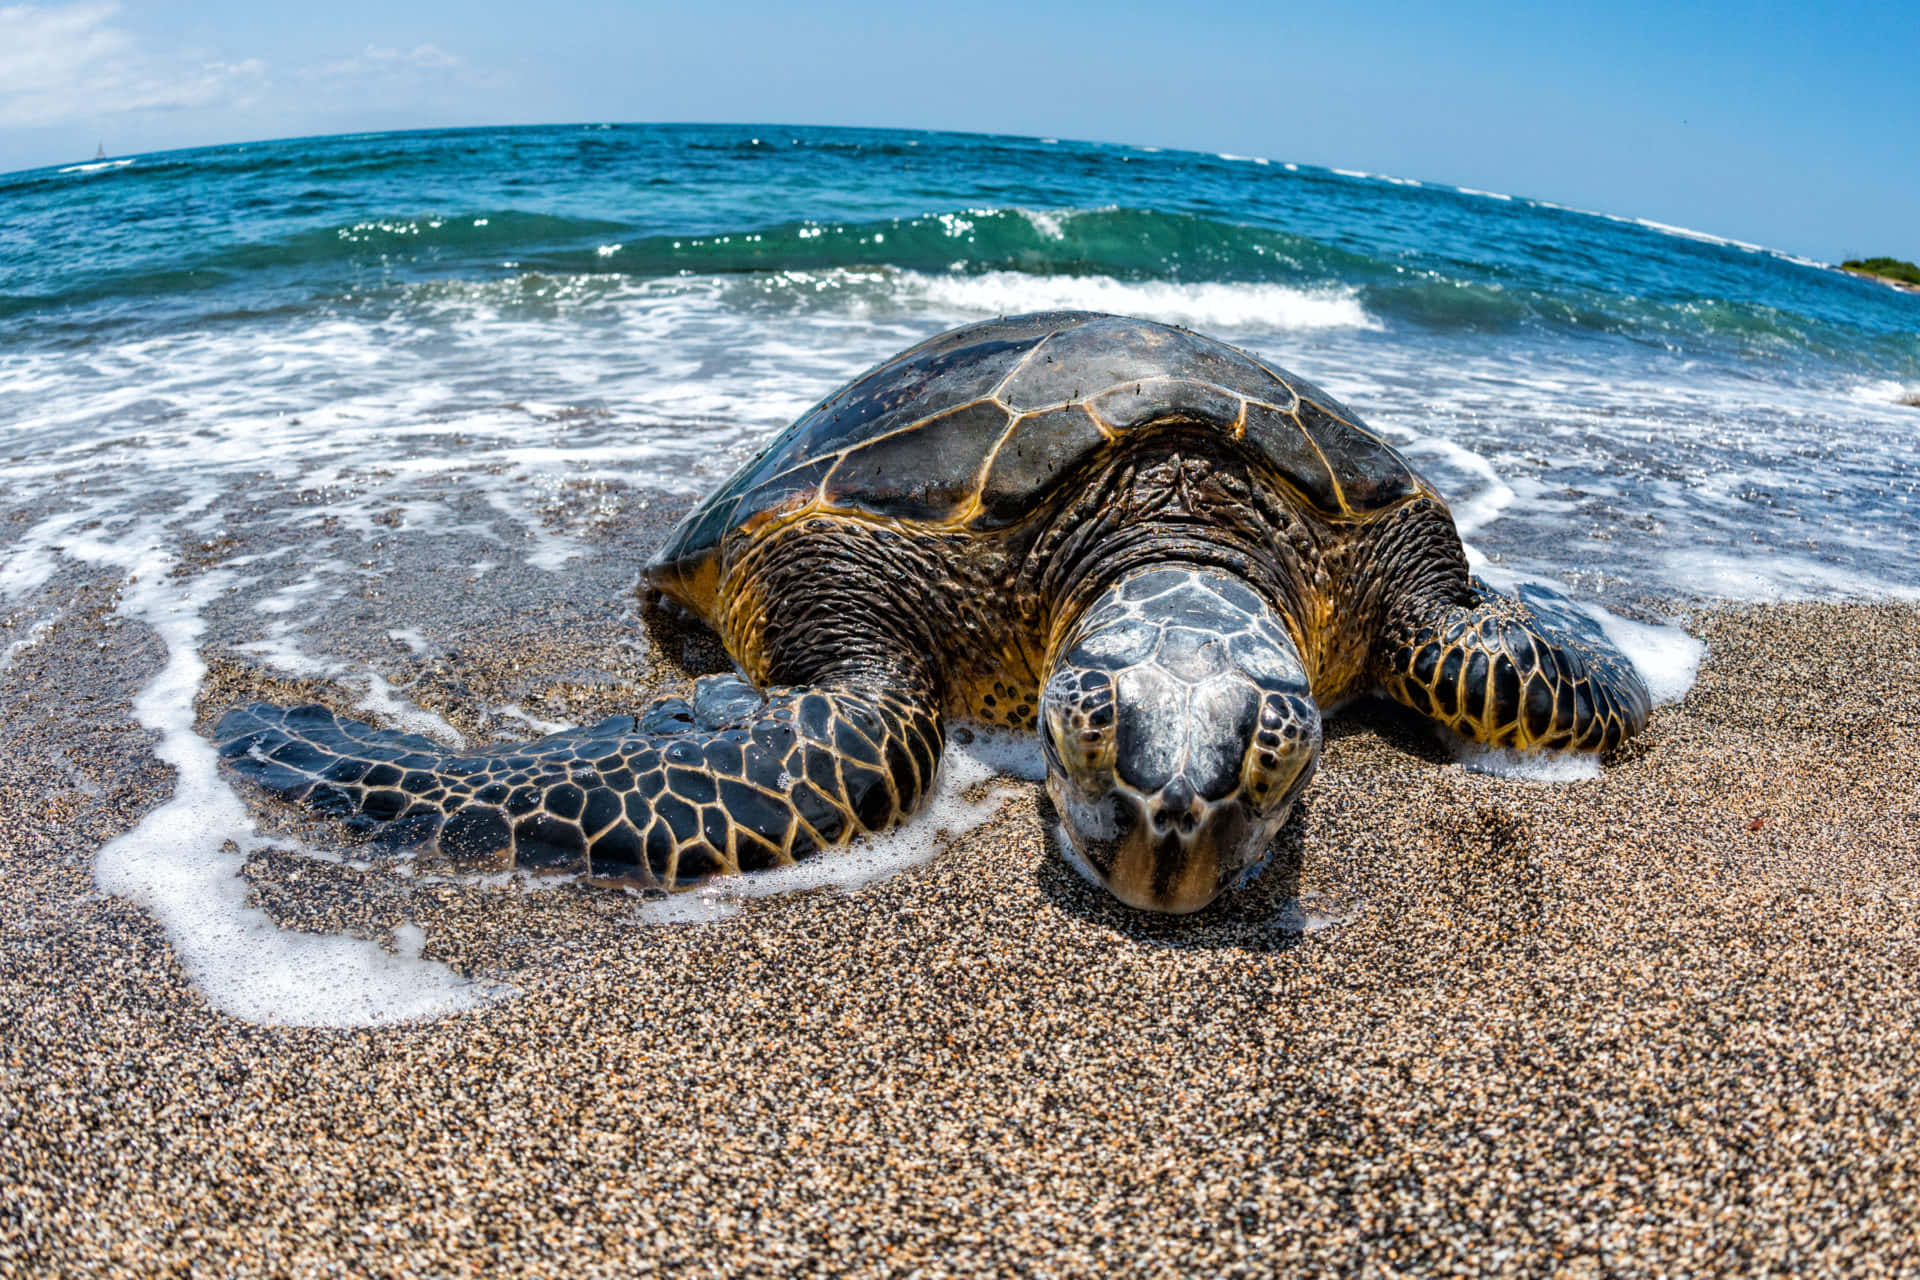 A beautiful sea turtle gliding through the ocean